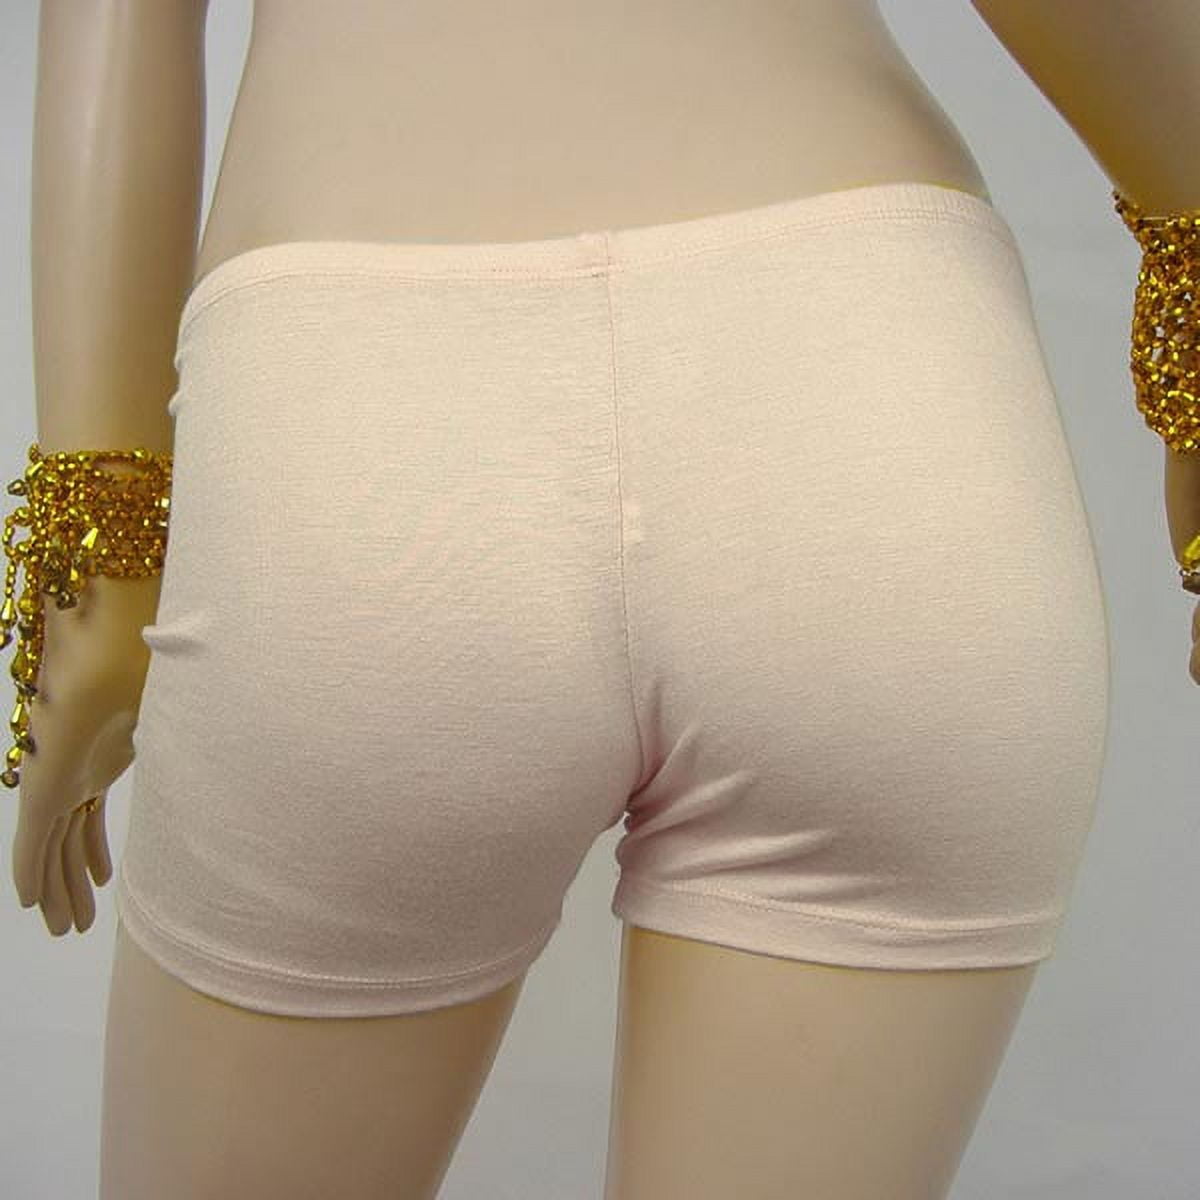 Belly Dance Shorts Pants Costume Cotton Safety Underwear Short